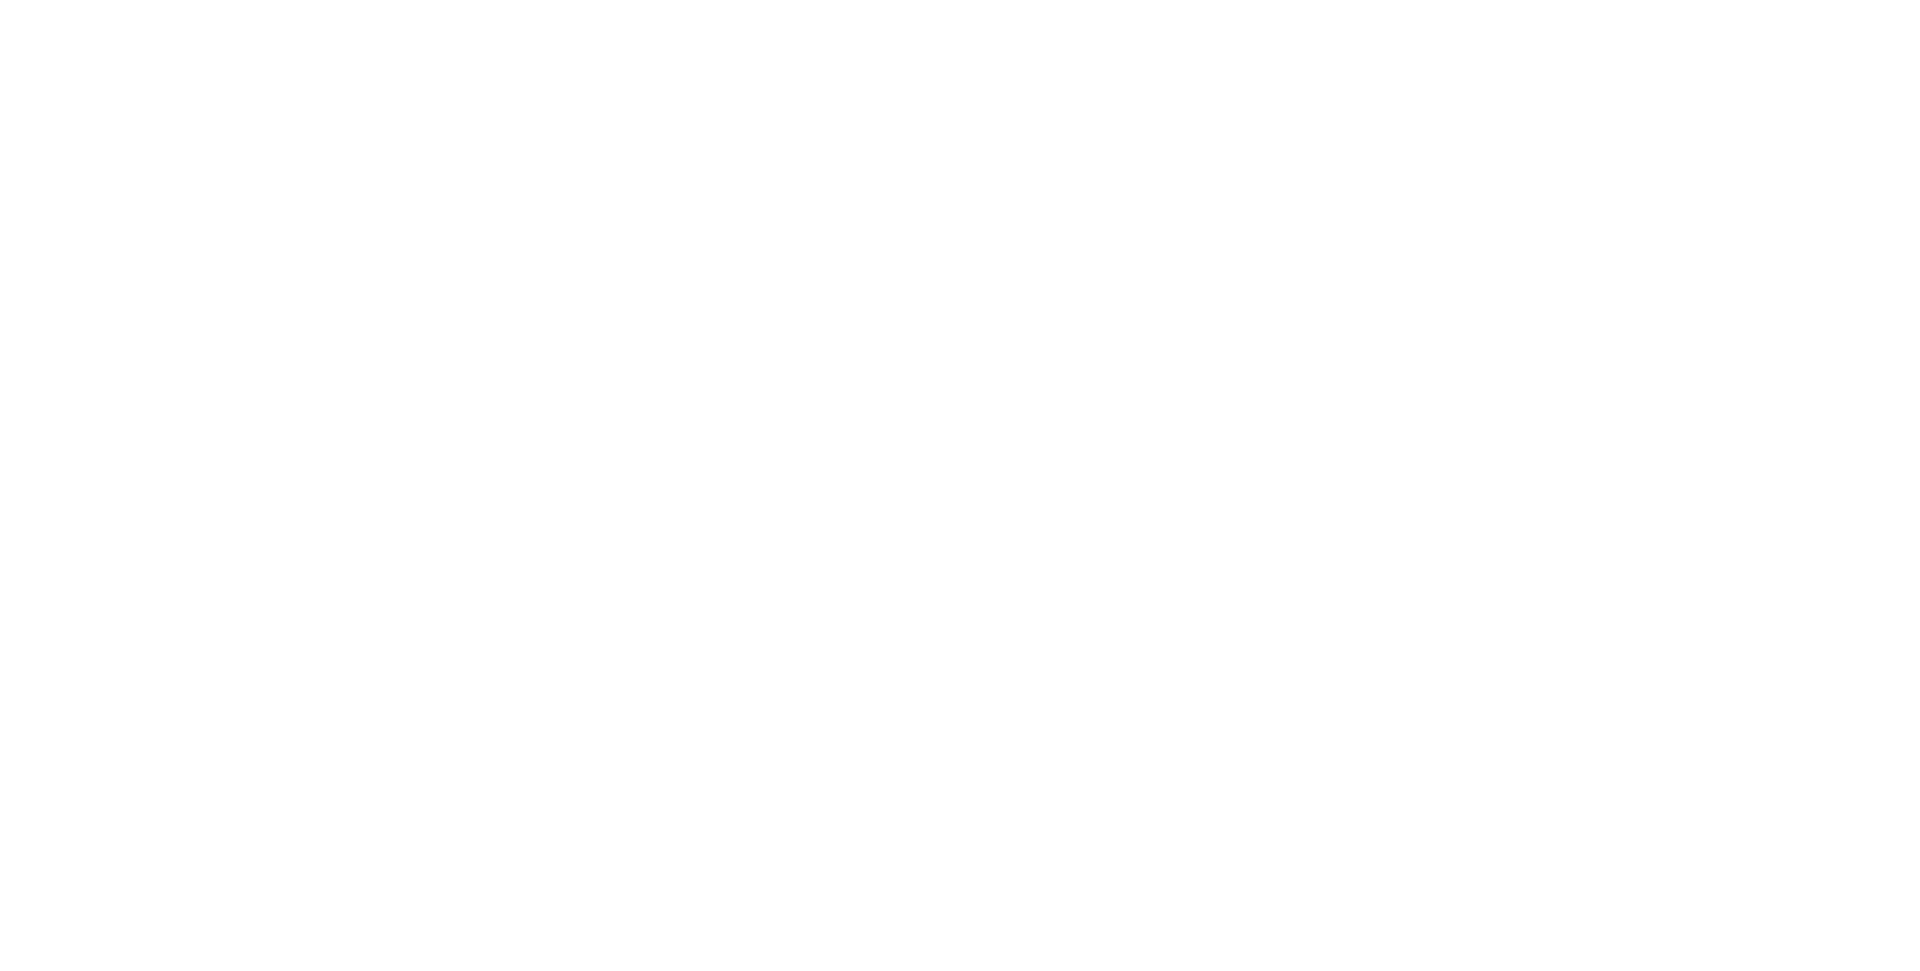 2022 Japan Game Award winners revealed